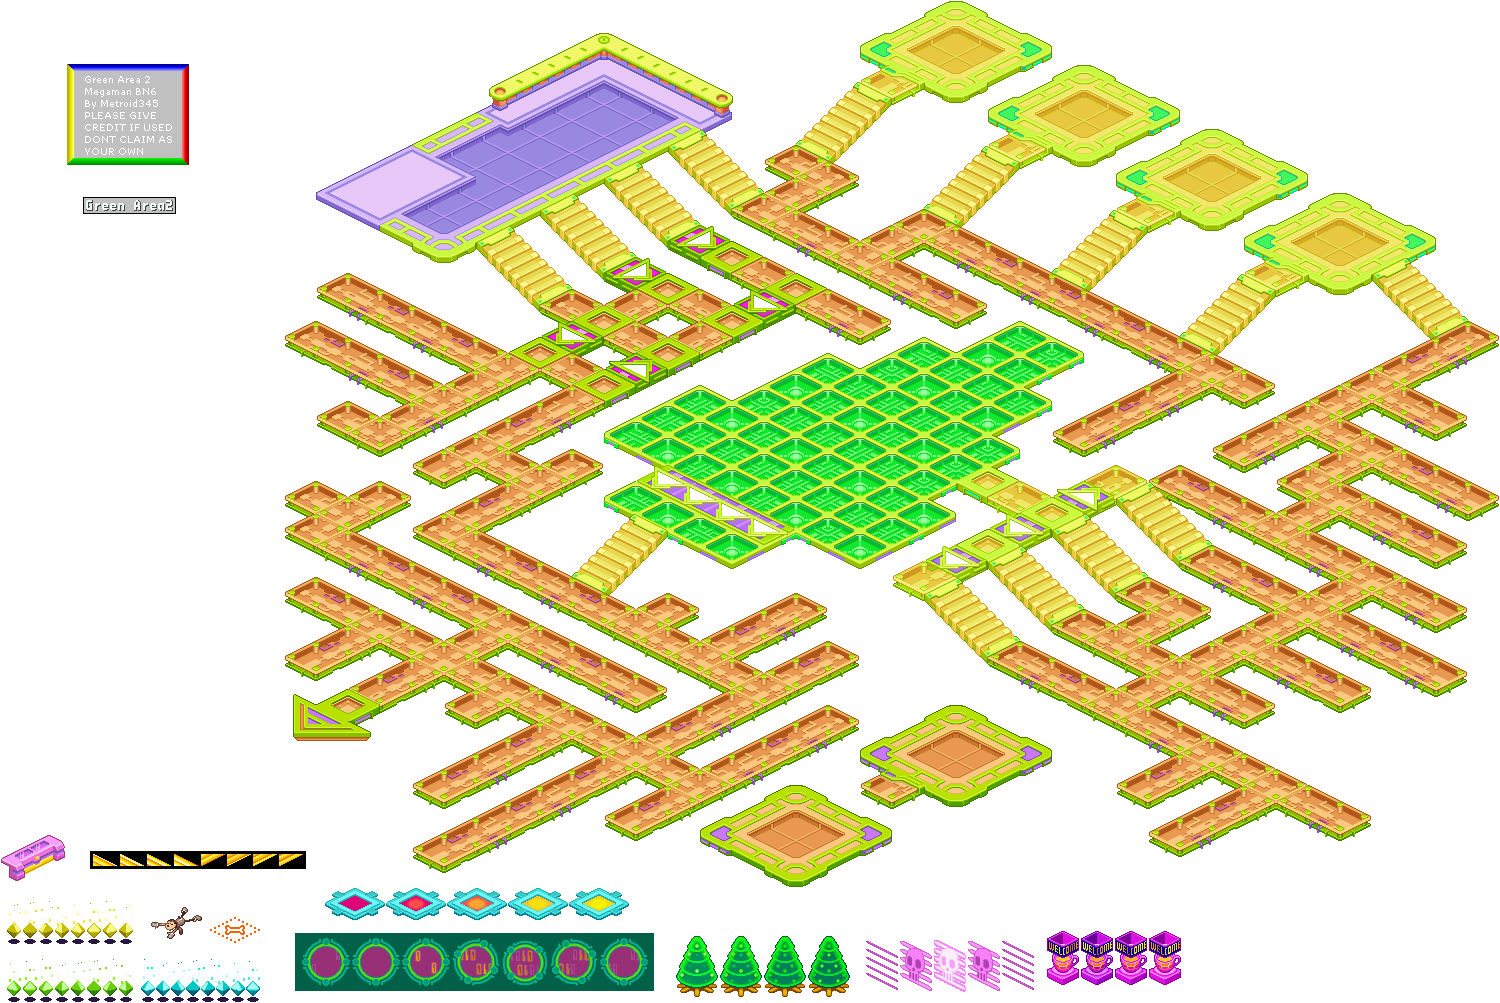 Mega Man Battle Network 6 - Green Area 2